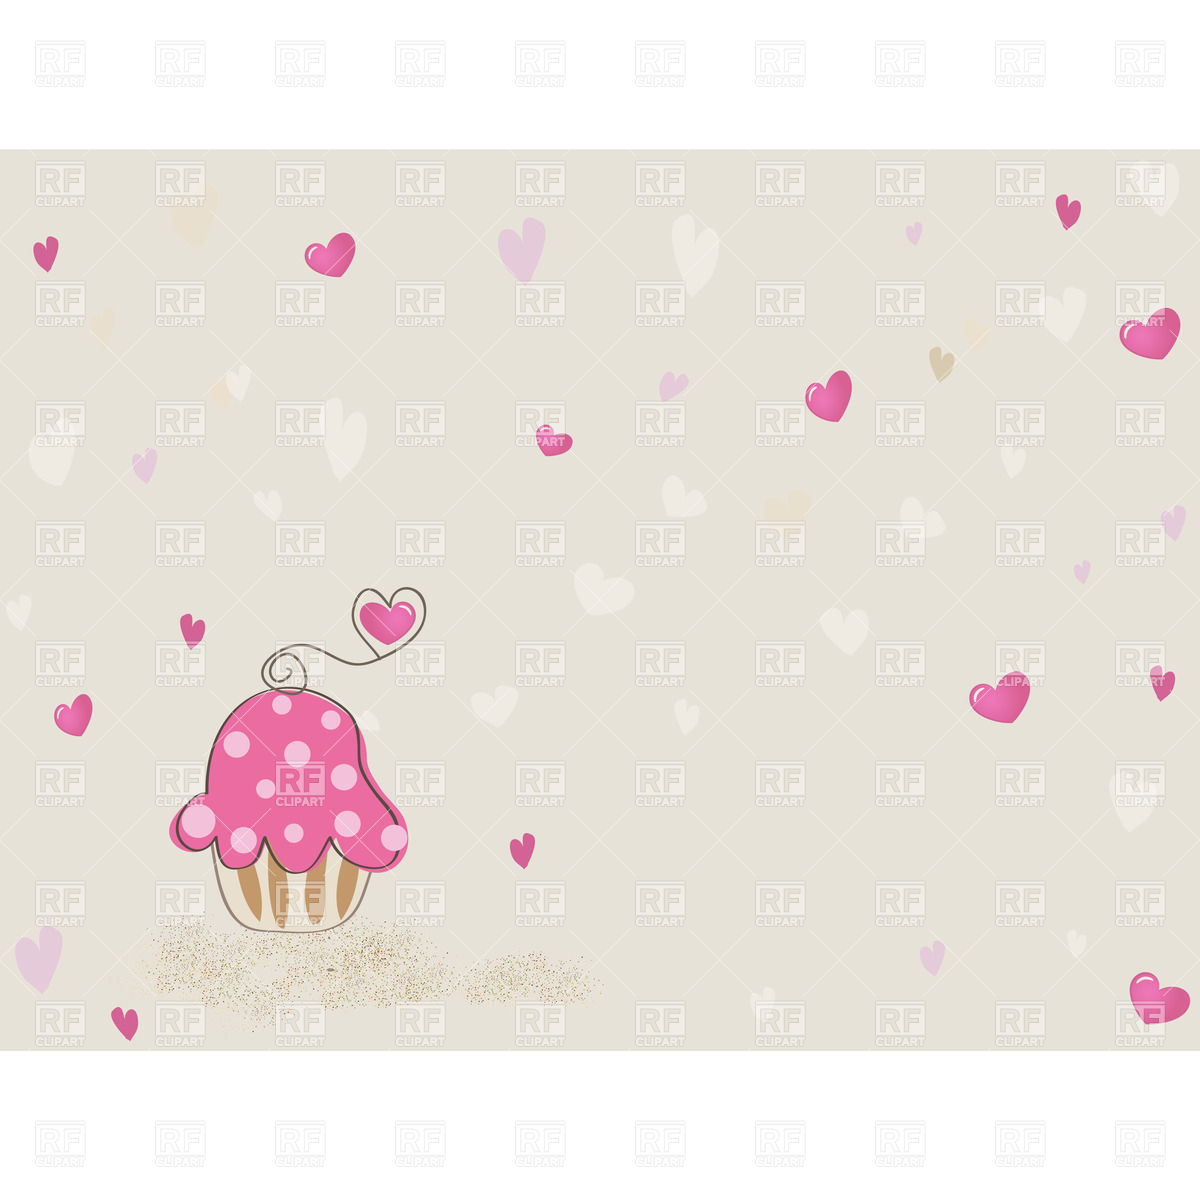 cupcakes clipart wallpaper